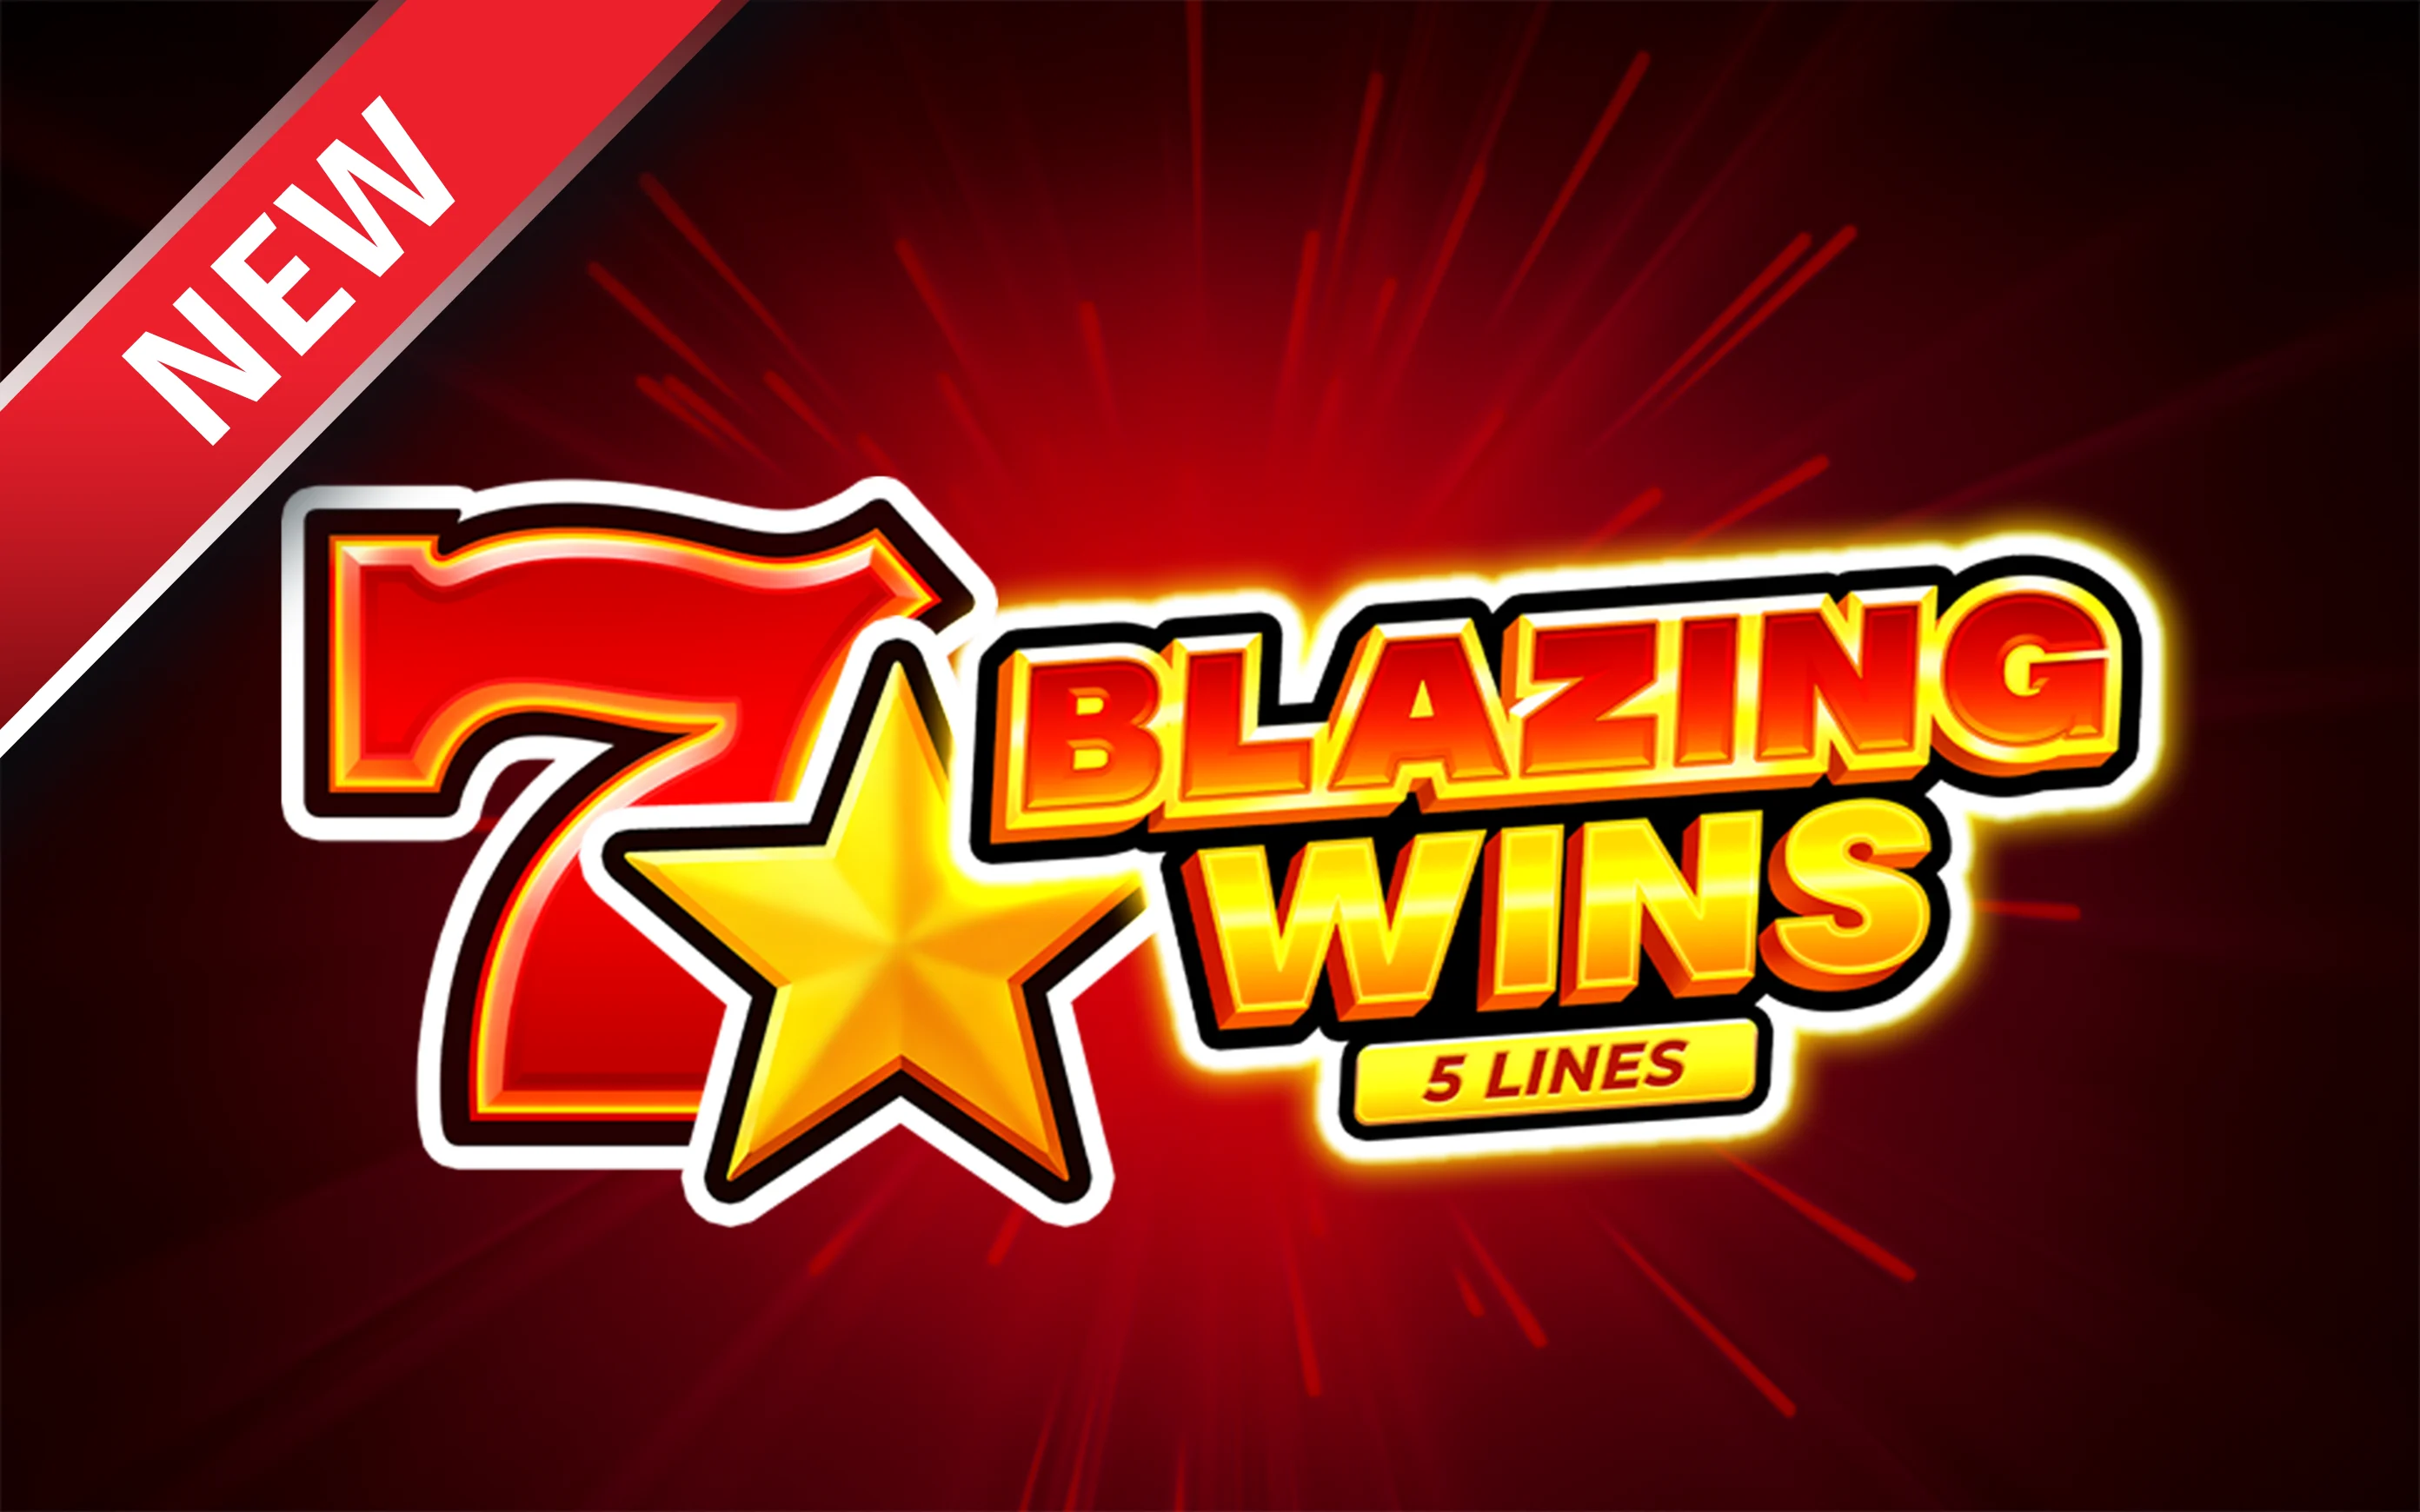 Play Blazing Wins: 5 lines on Starcasino.be online casino